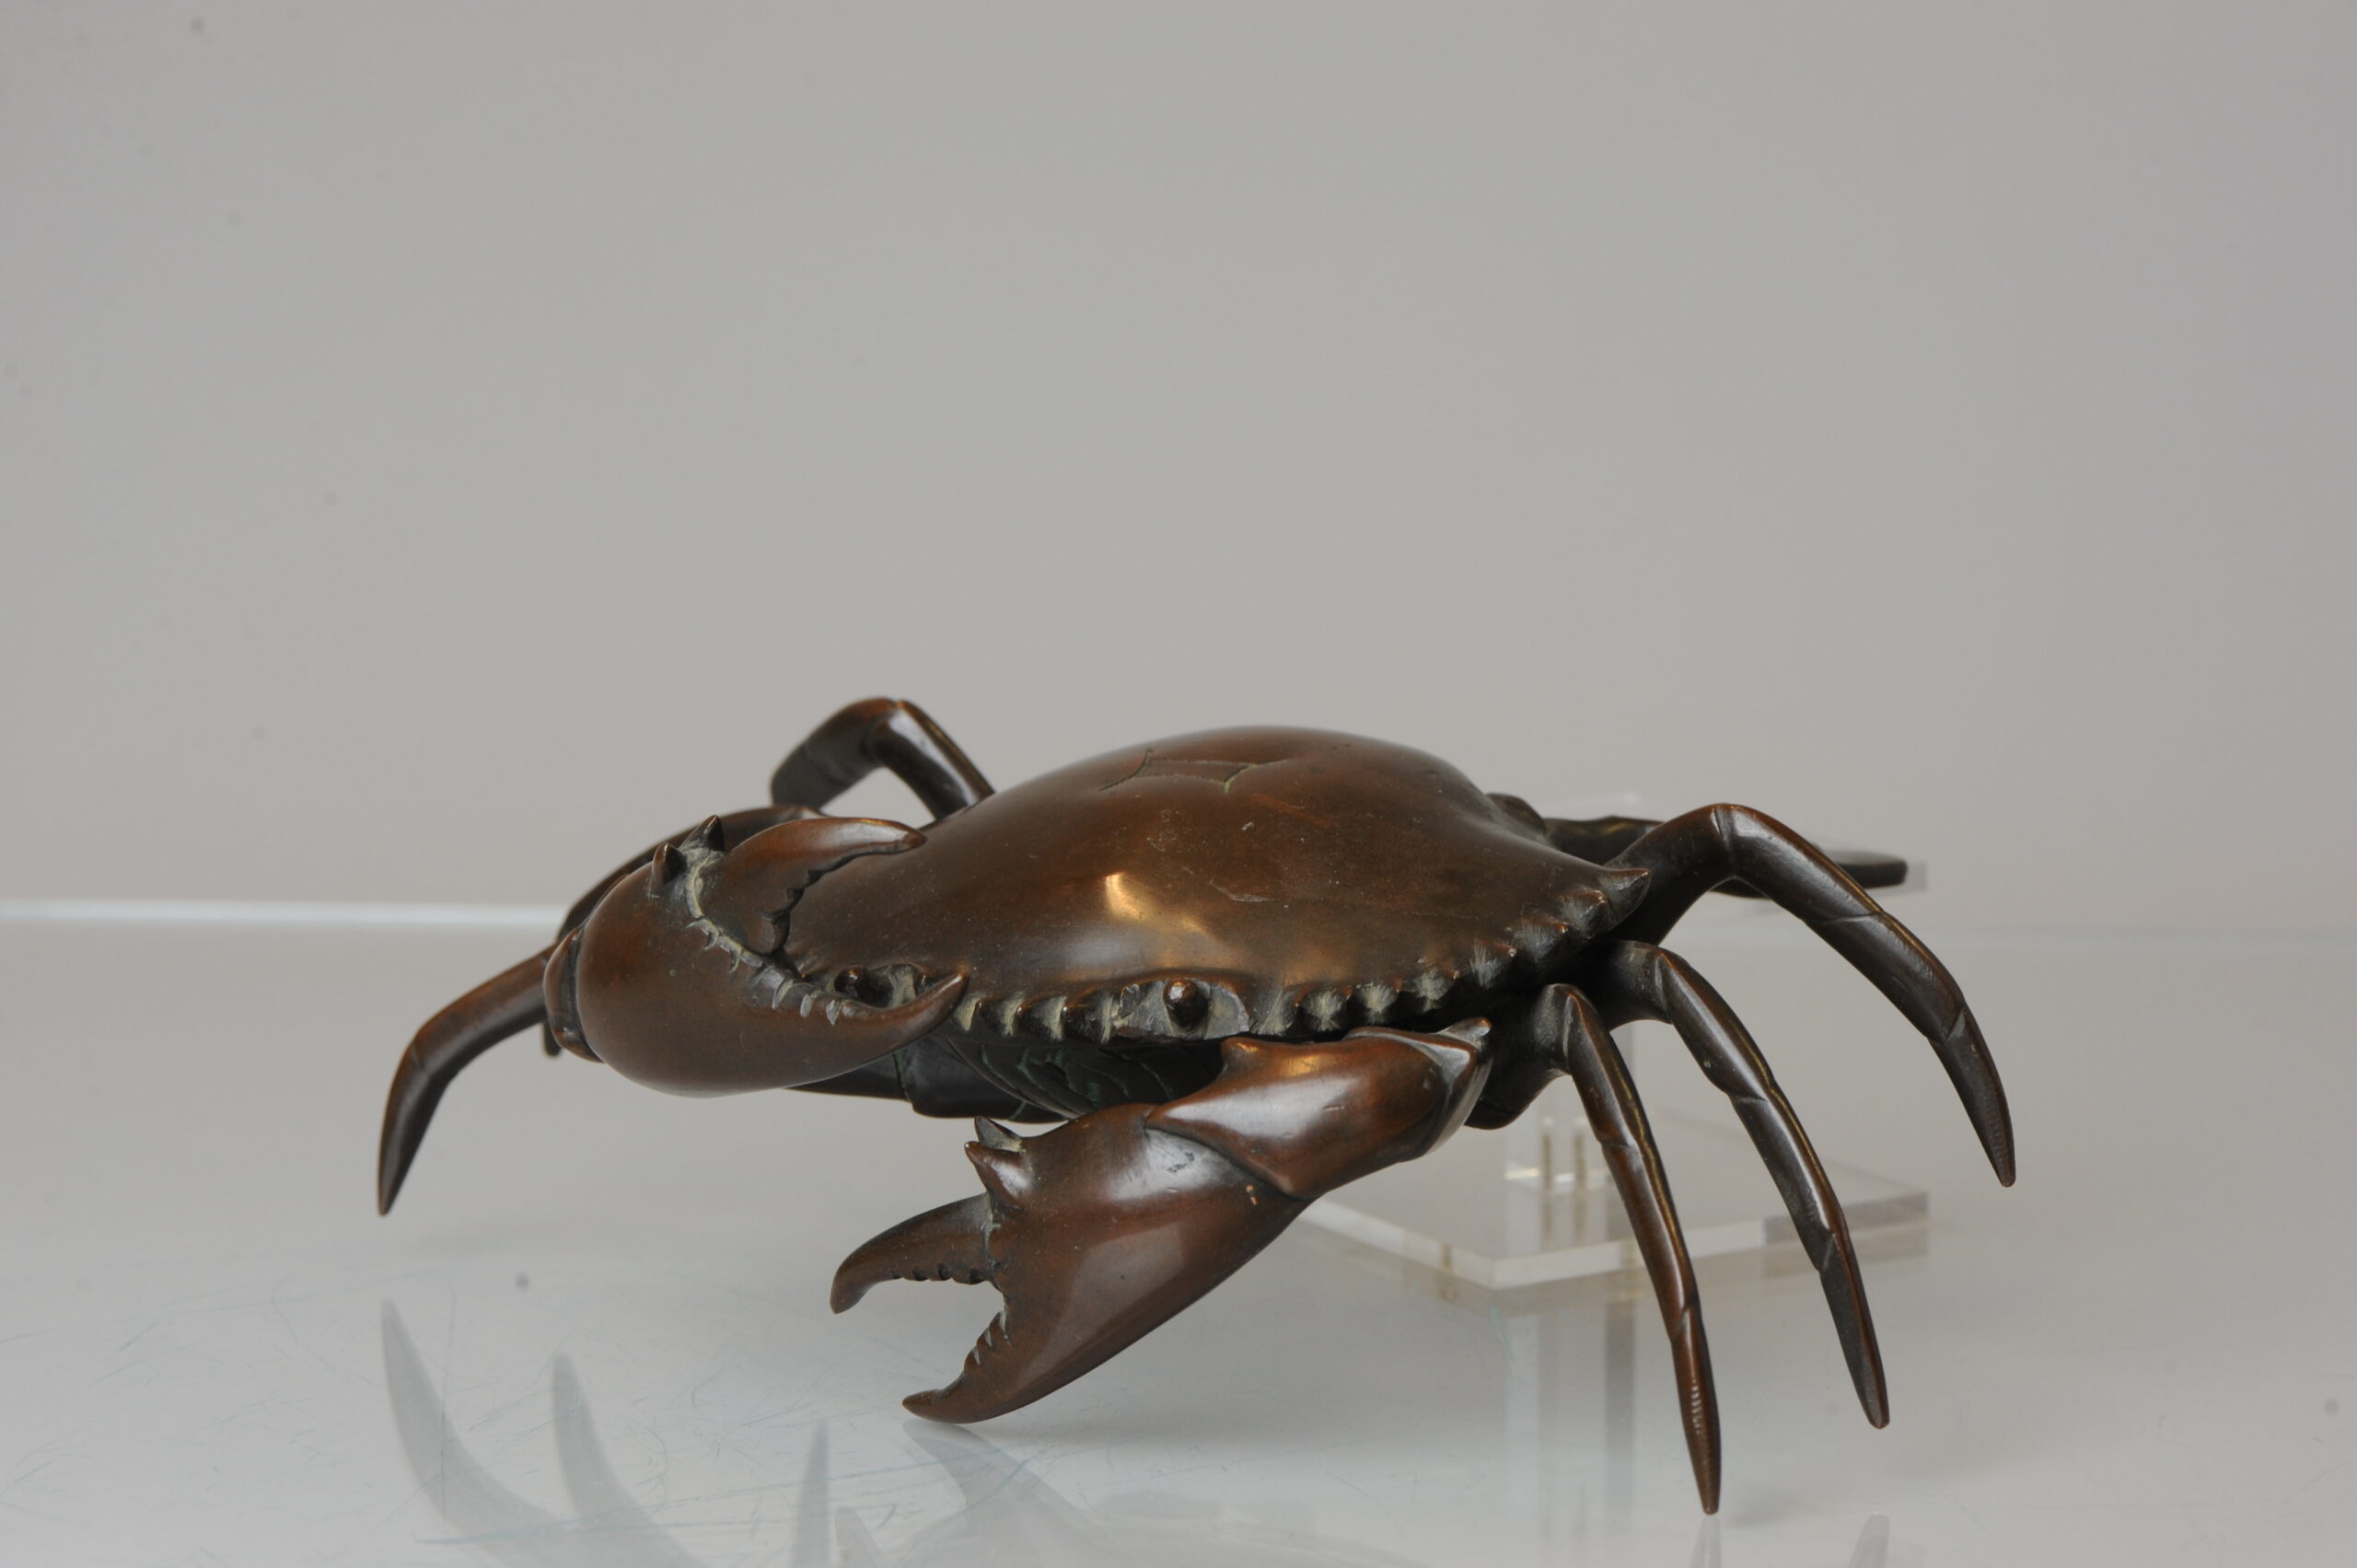 Antique Bronze Meiji Okimono Inkpot of a Crab 19th Century Japan, Japanese